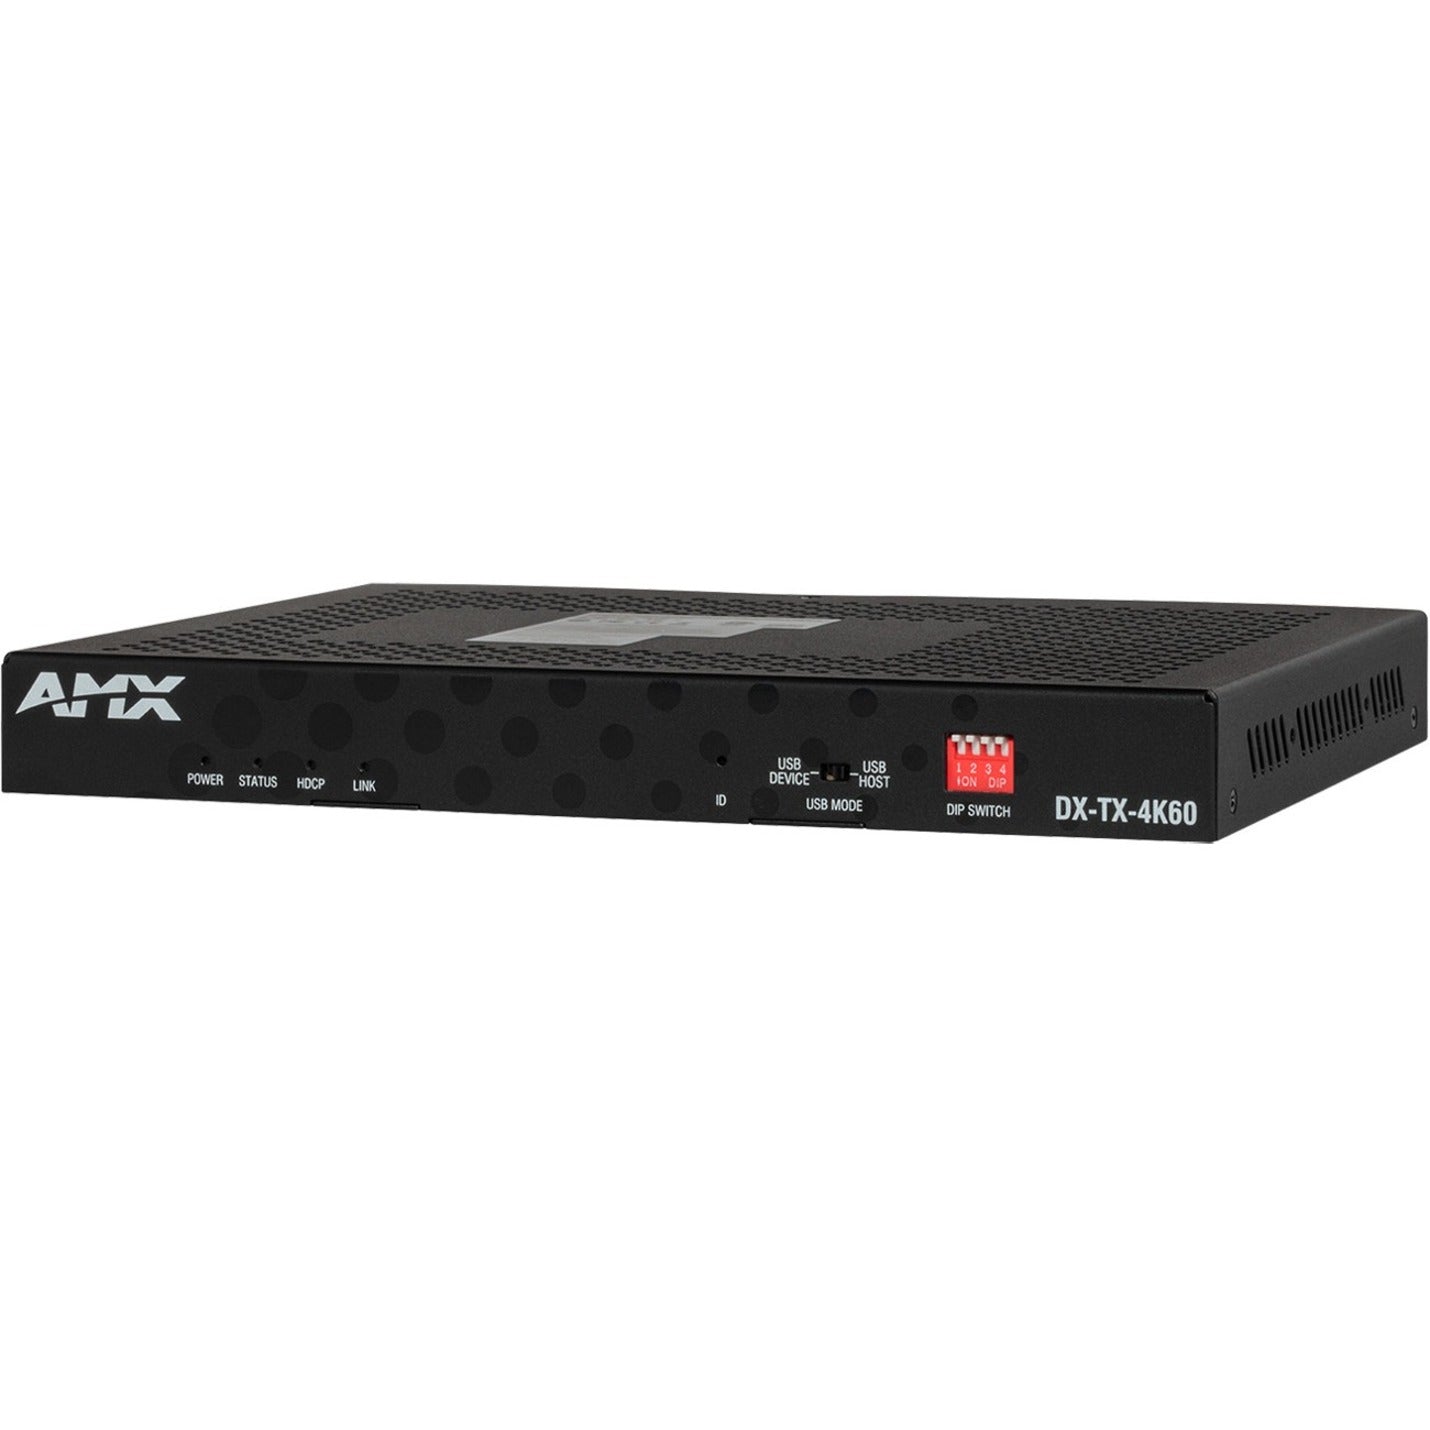 AMX FG1010-312-01 DX-TX-4K60 DXLink 4K60 HDMI Transmitter Module, 4K UHD Video Extender Transmitter